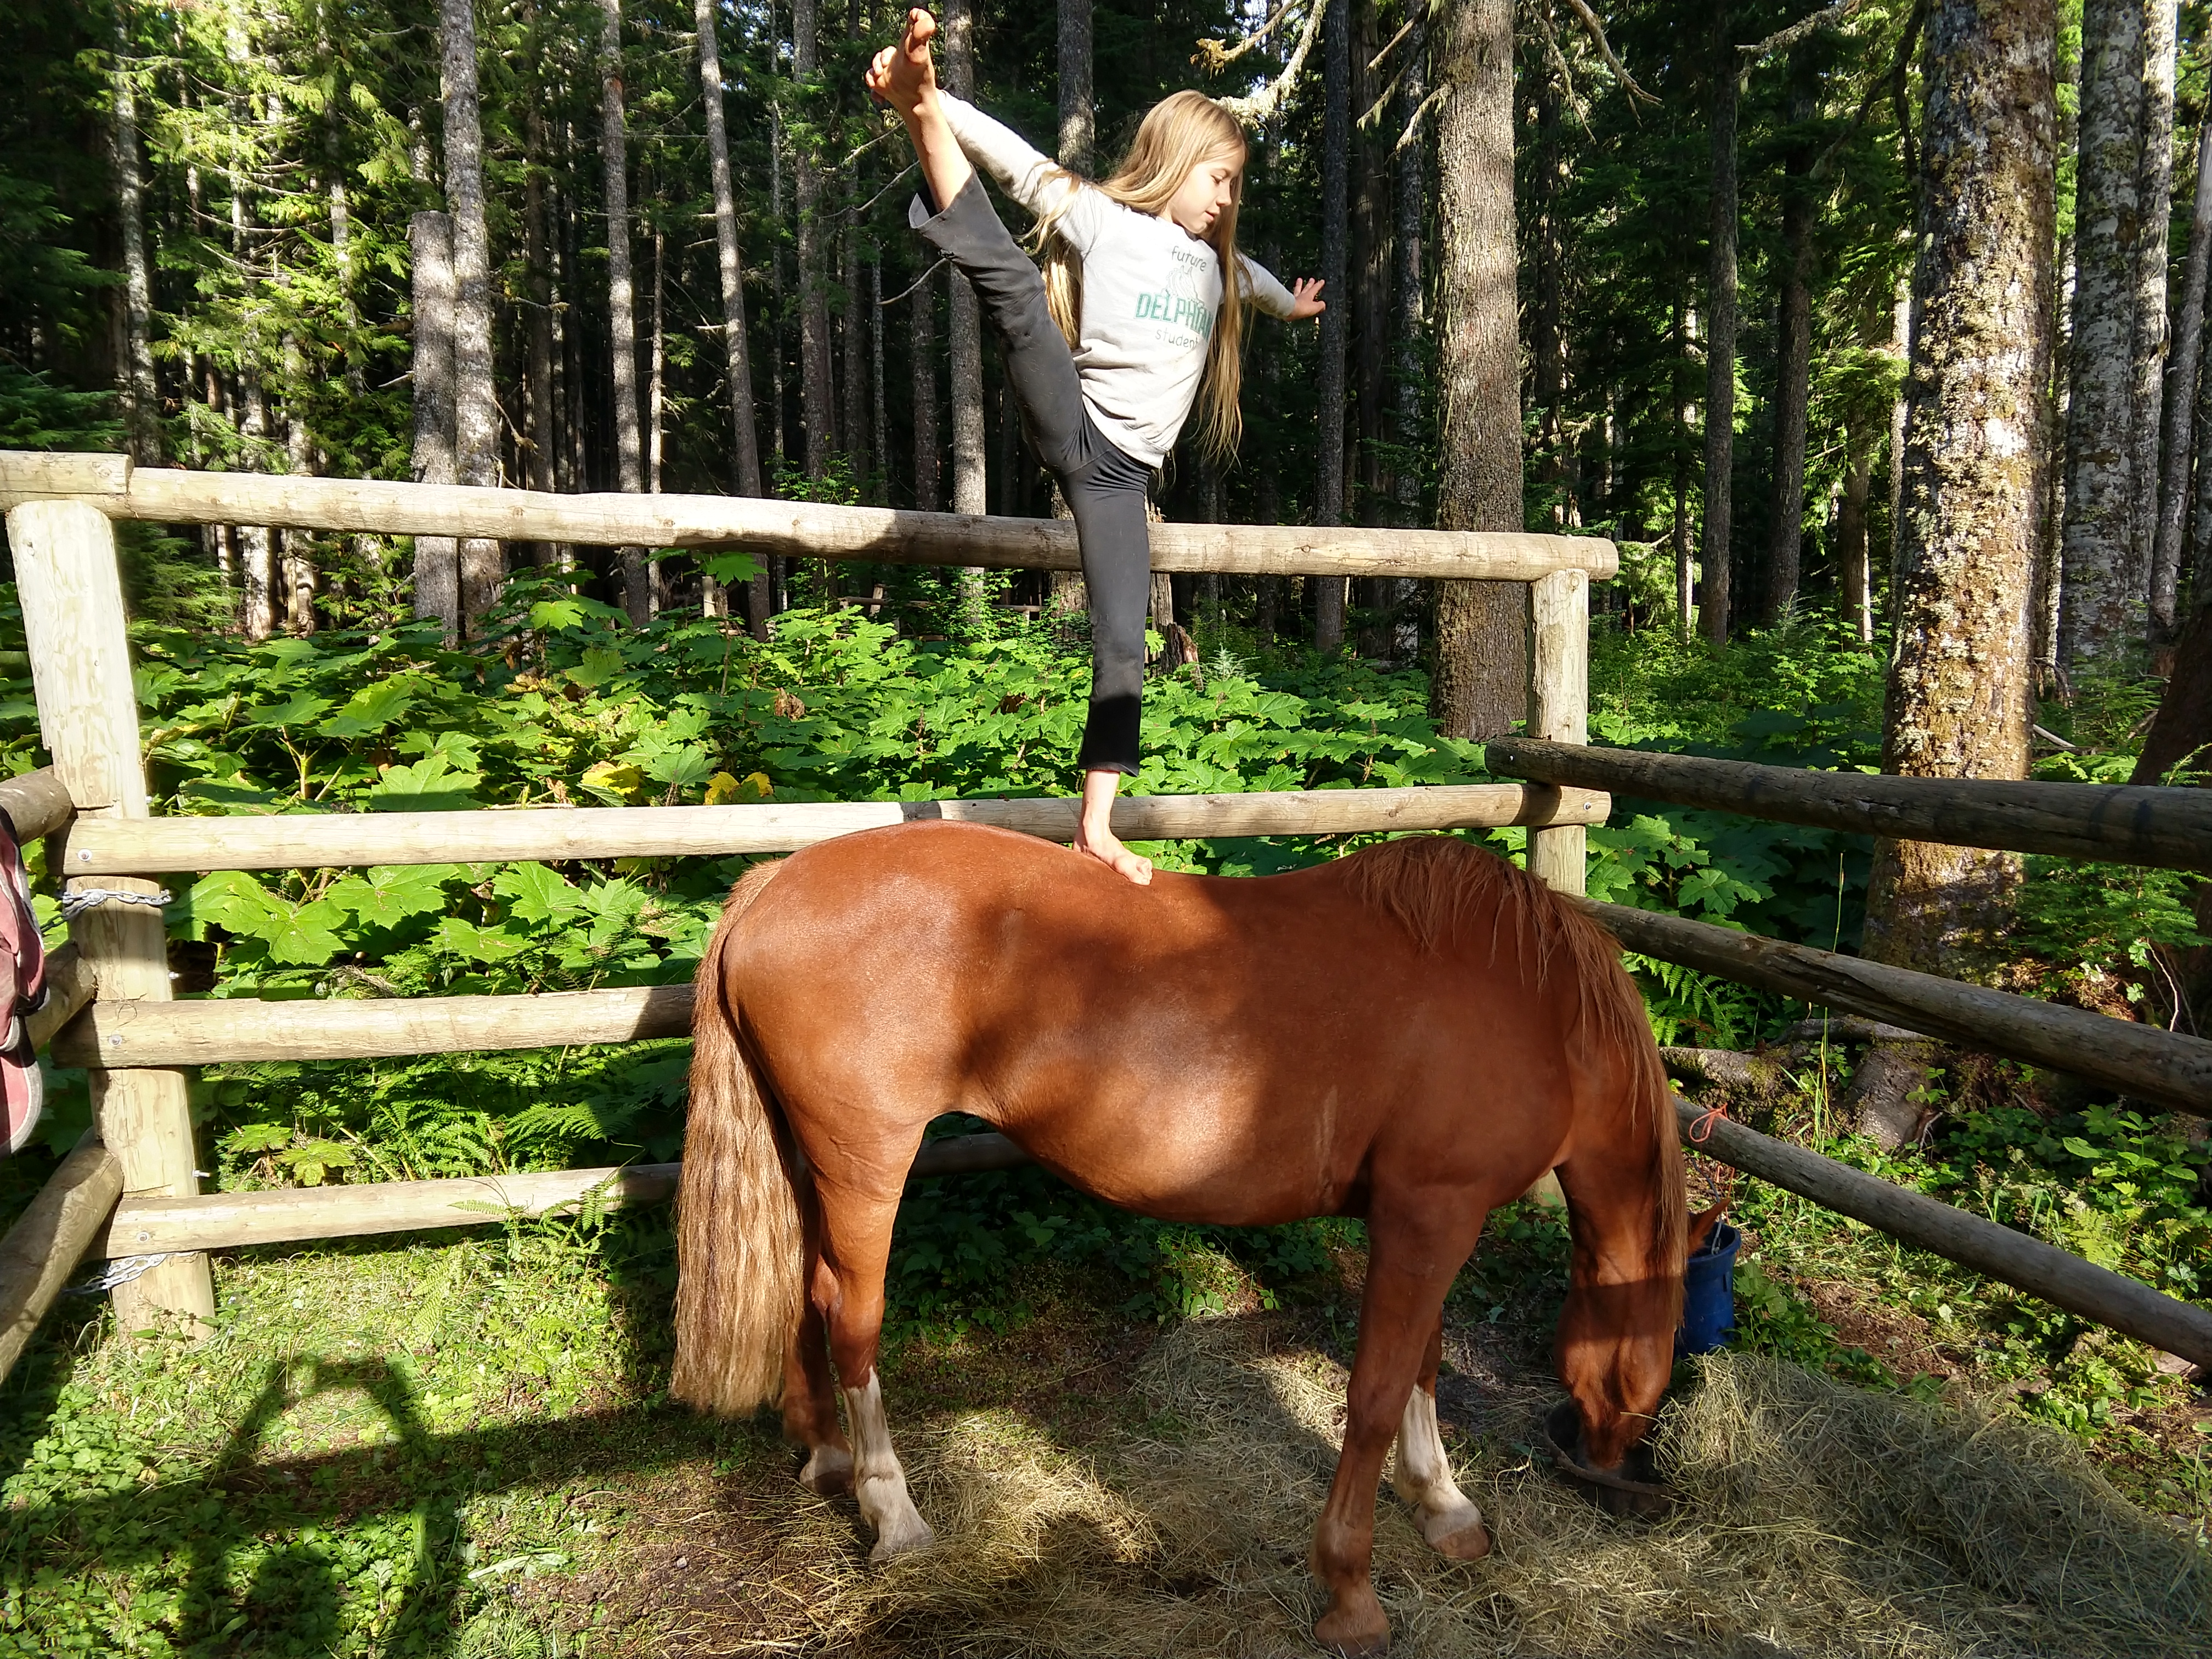 balancing-on-horseback_48741275216_o.jpg